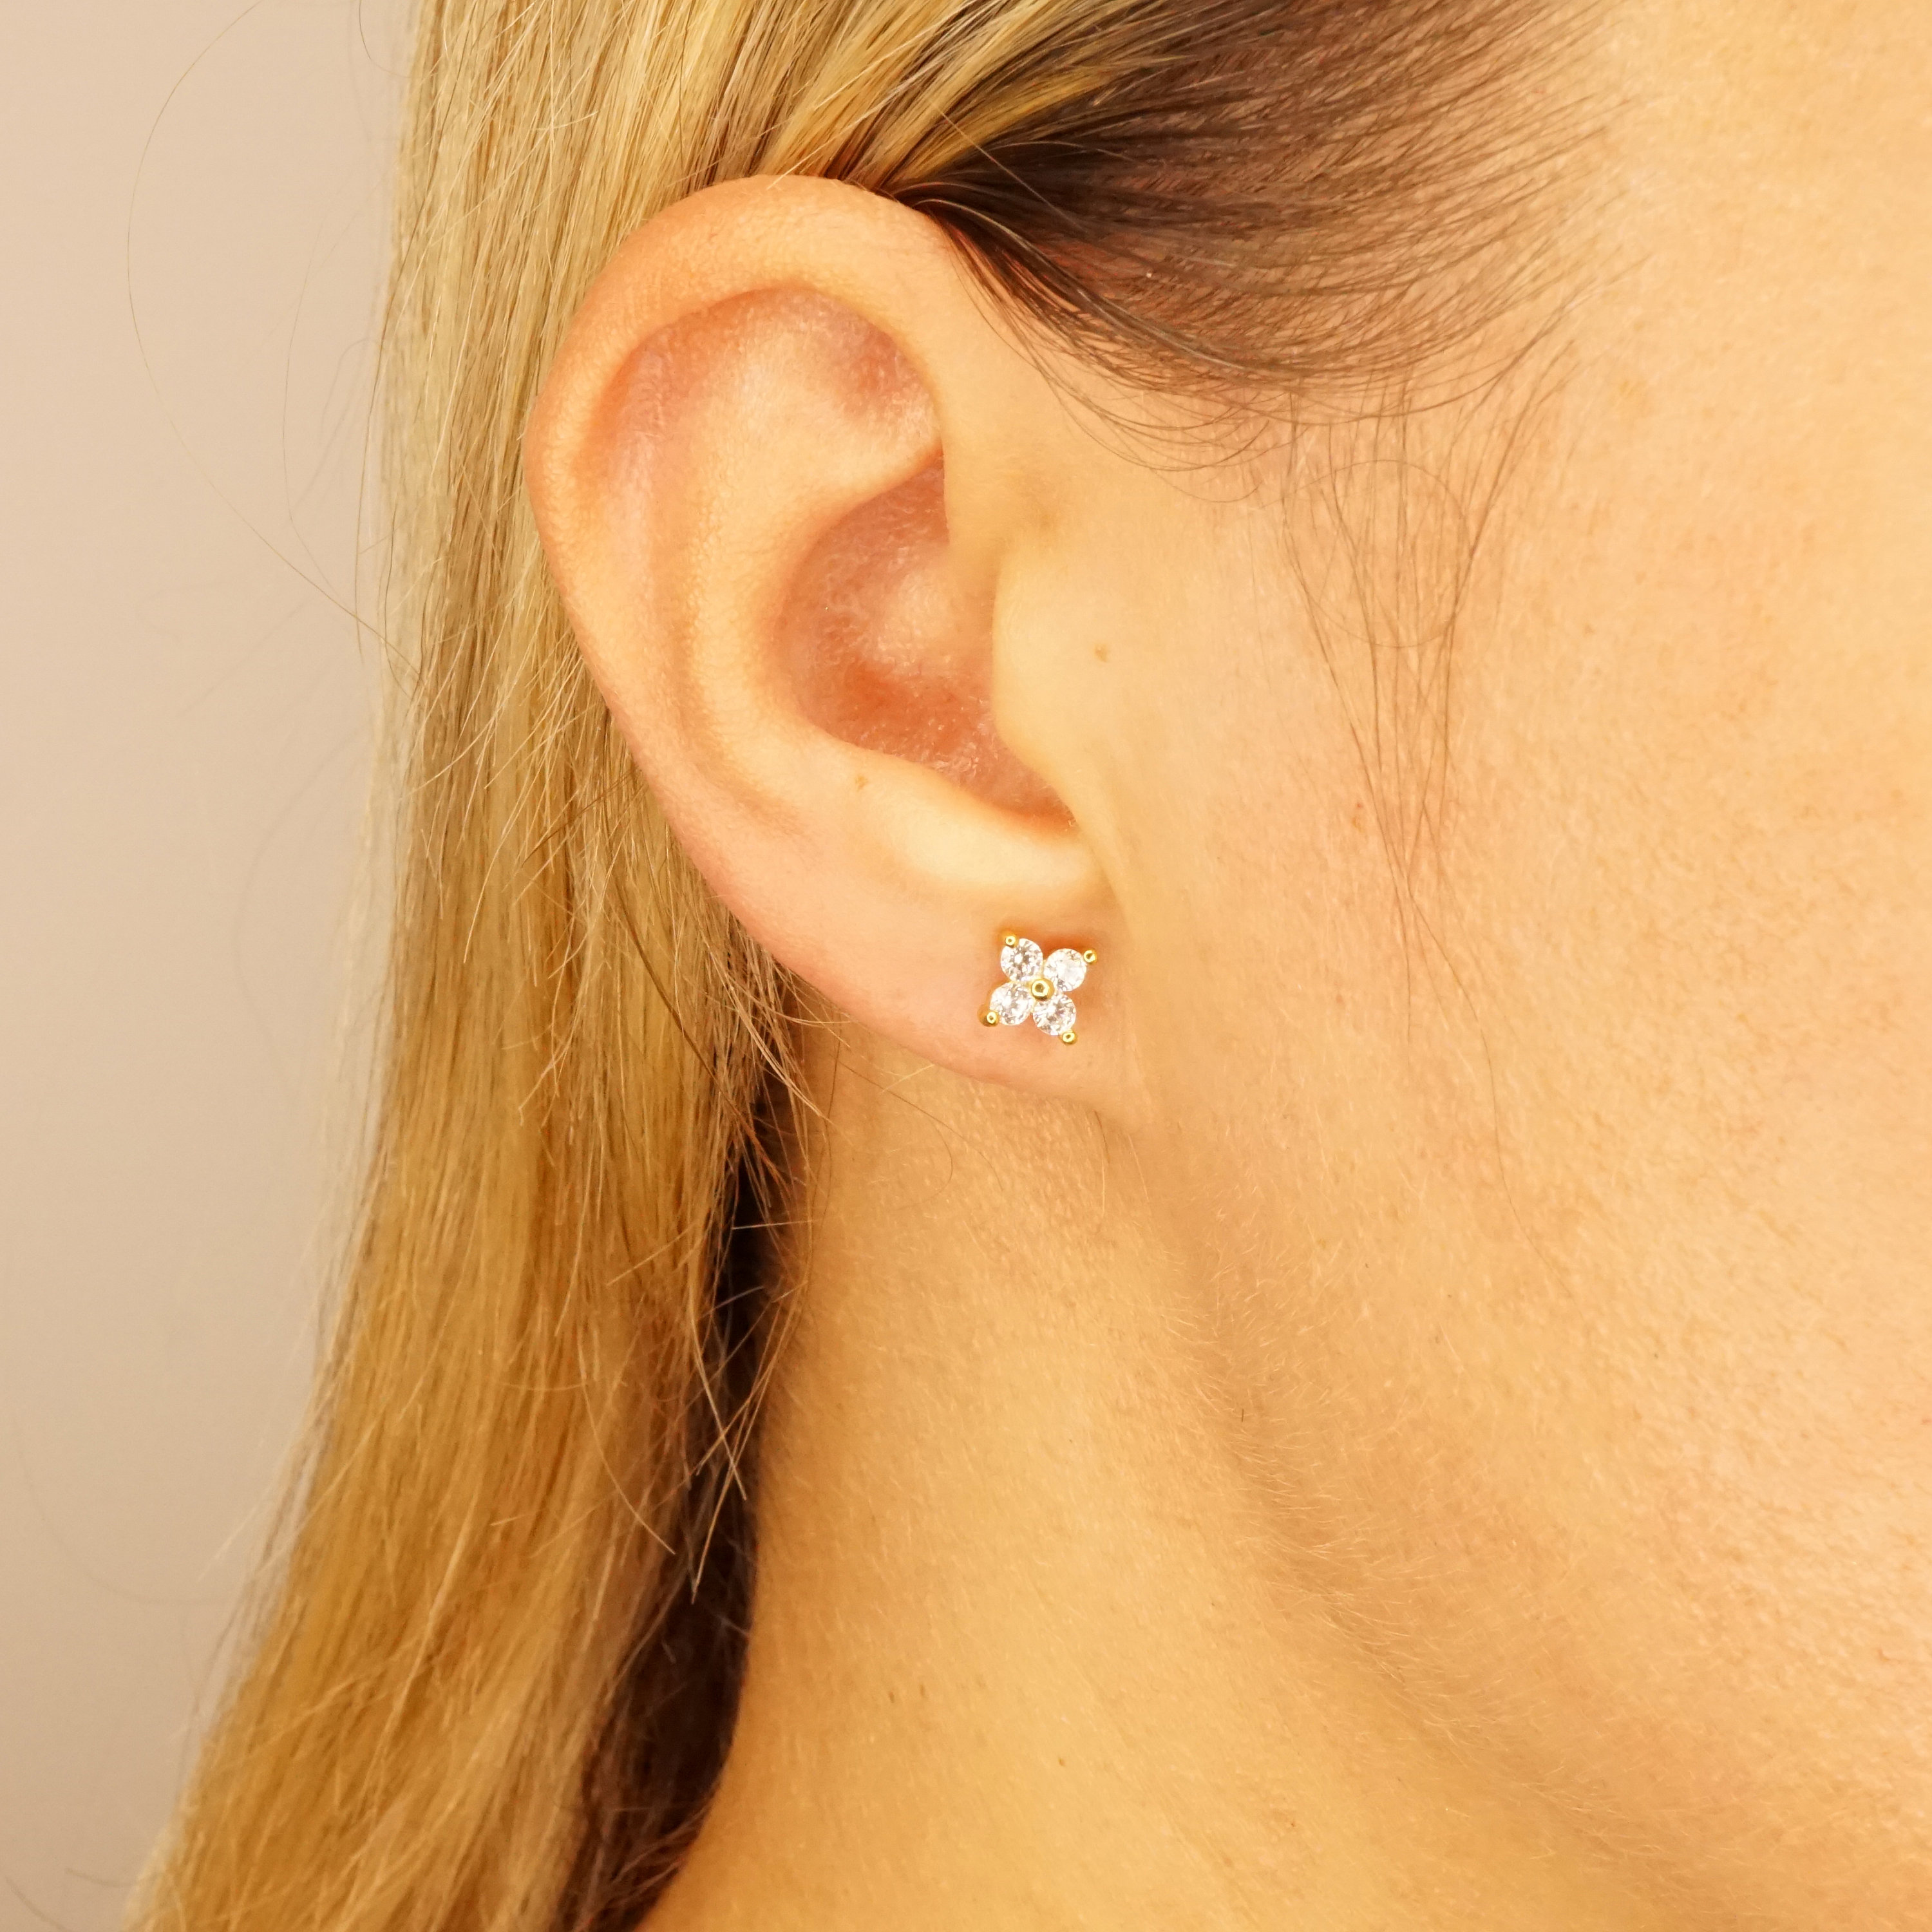 Clear Crystal Stud Earrings Large European Clear Post Earrings